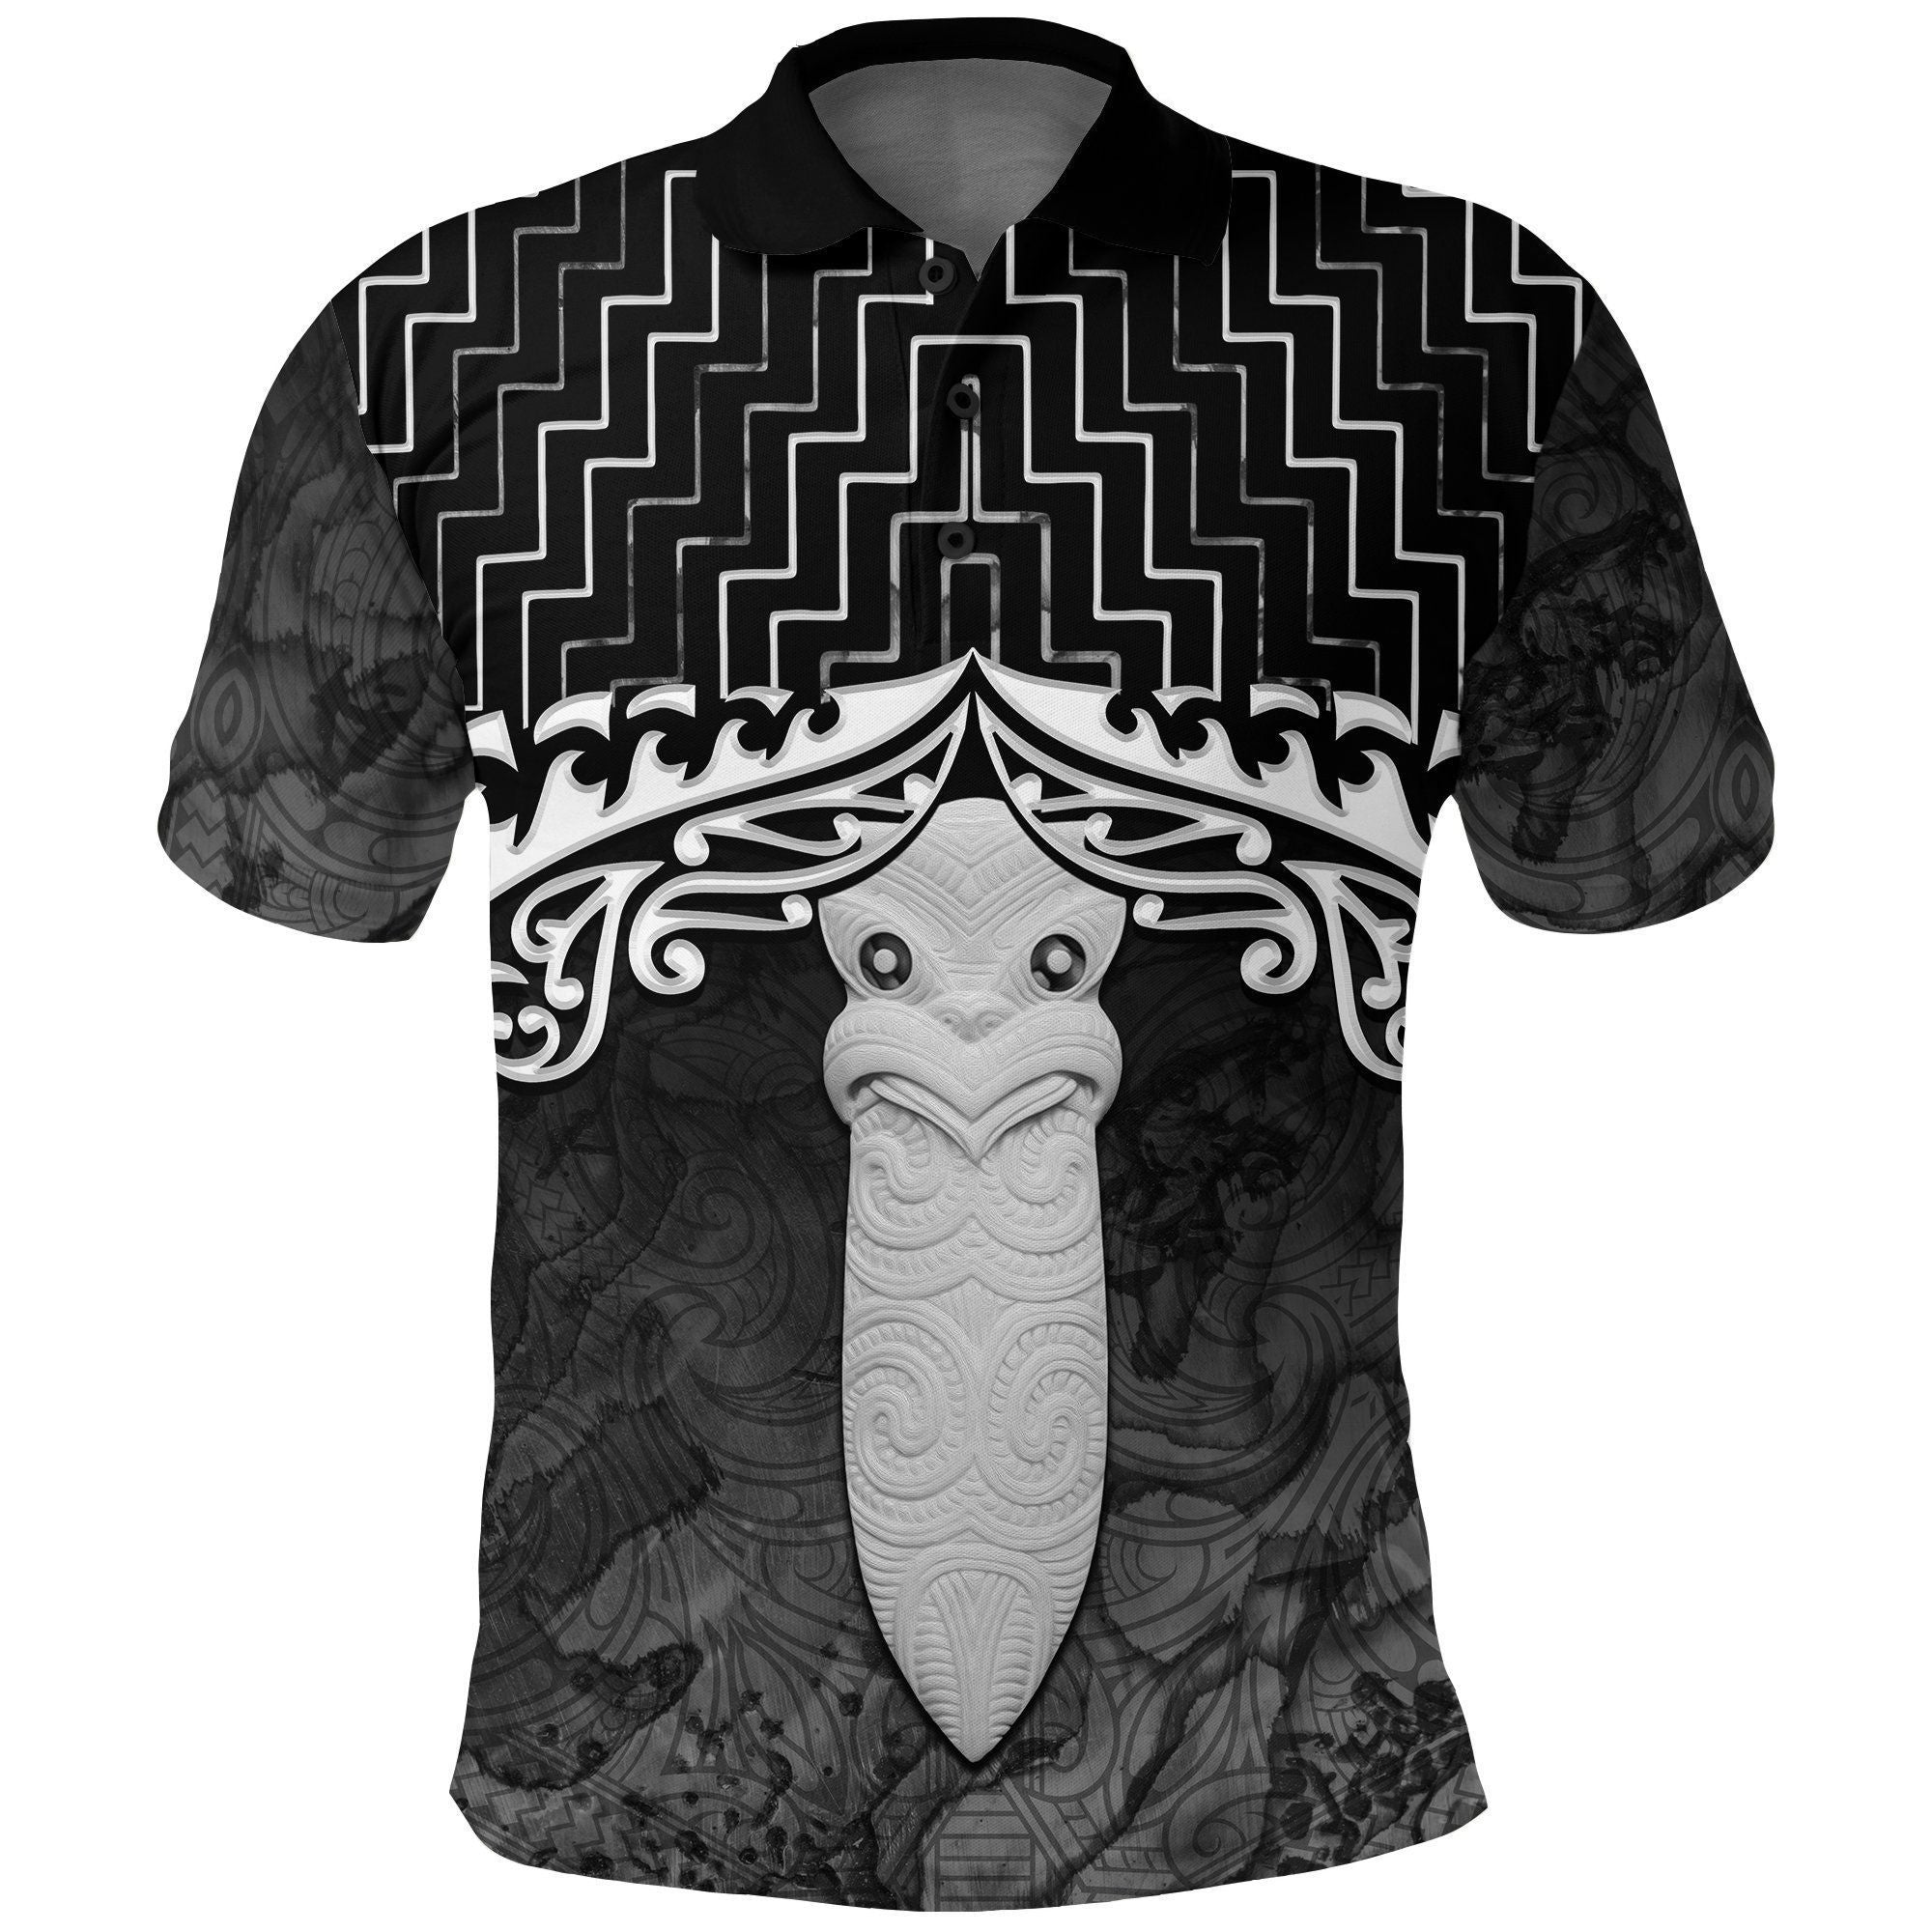 Polynesian Pride Apparel New Zealand Maori Polo Shirt, Poutama Taiaha Mauri Golf Shirt Black Unisex Black - Polynesian Pride